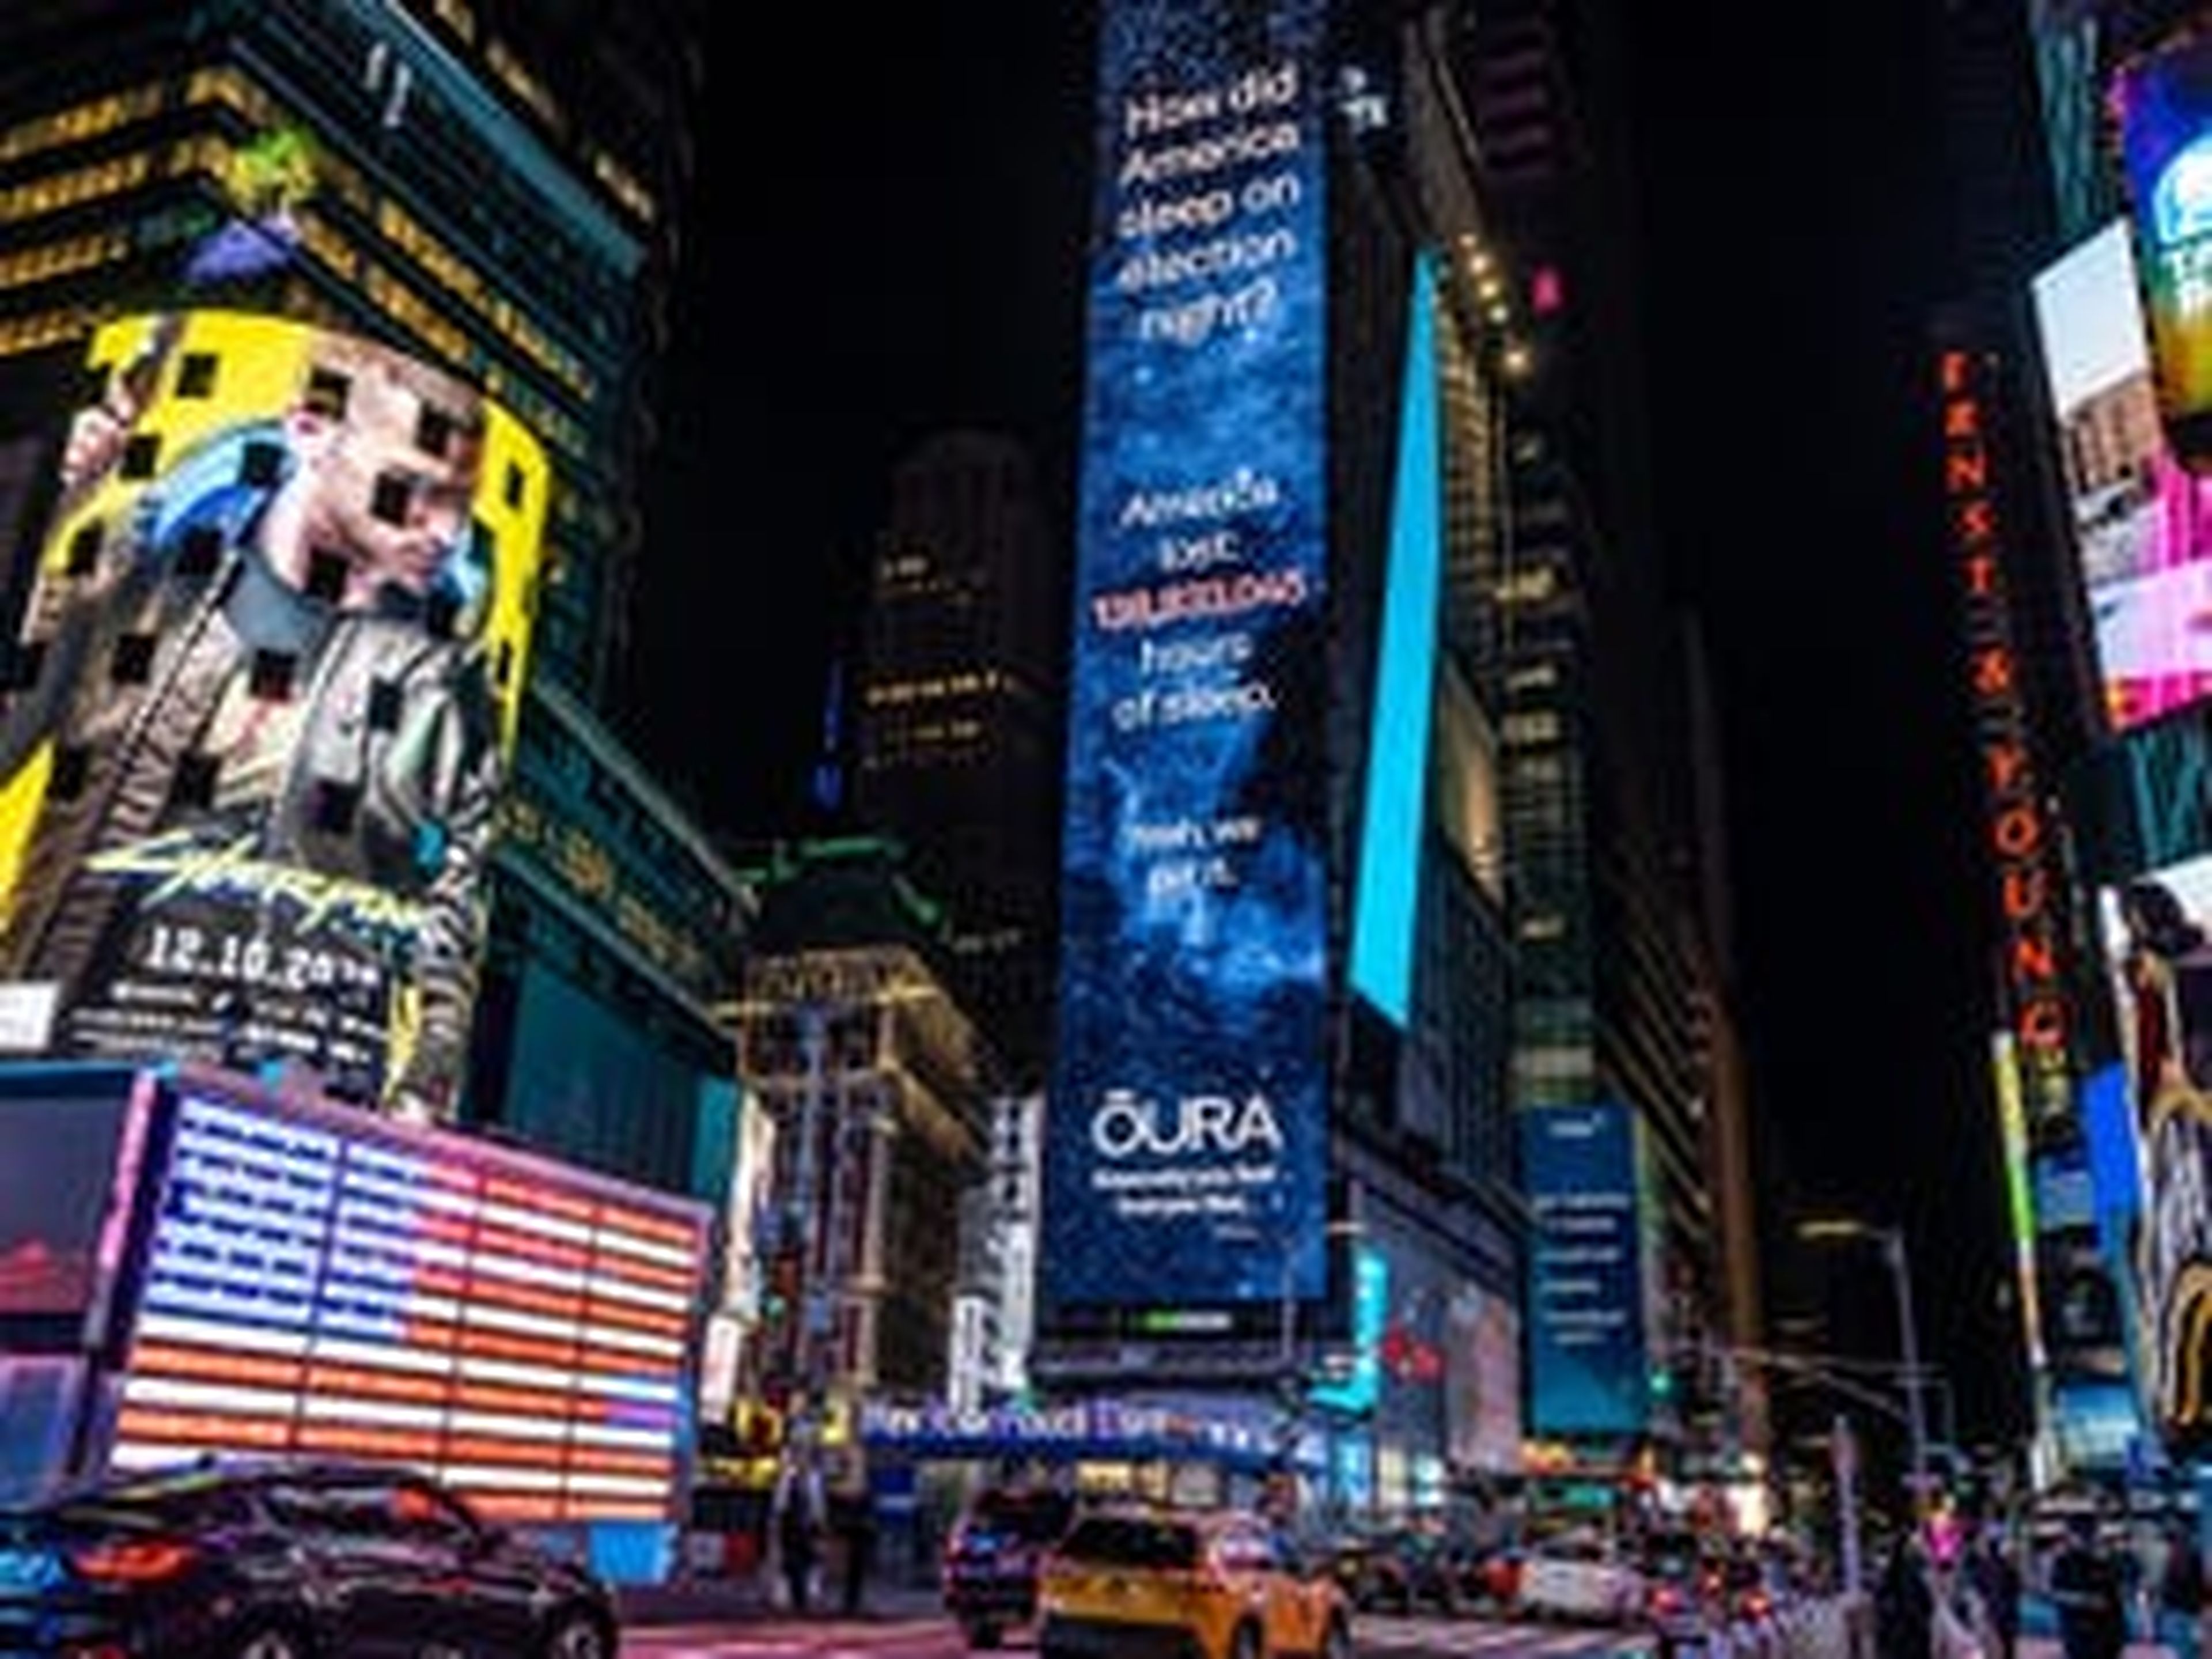 Anuncio de Oura en Times Square